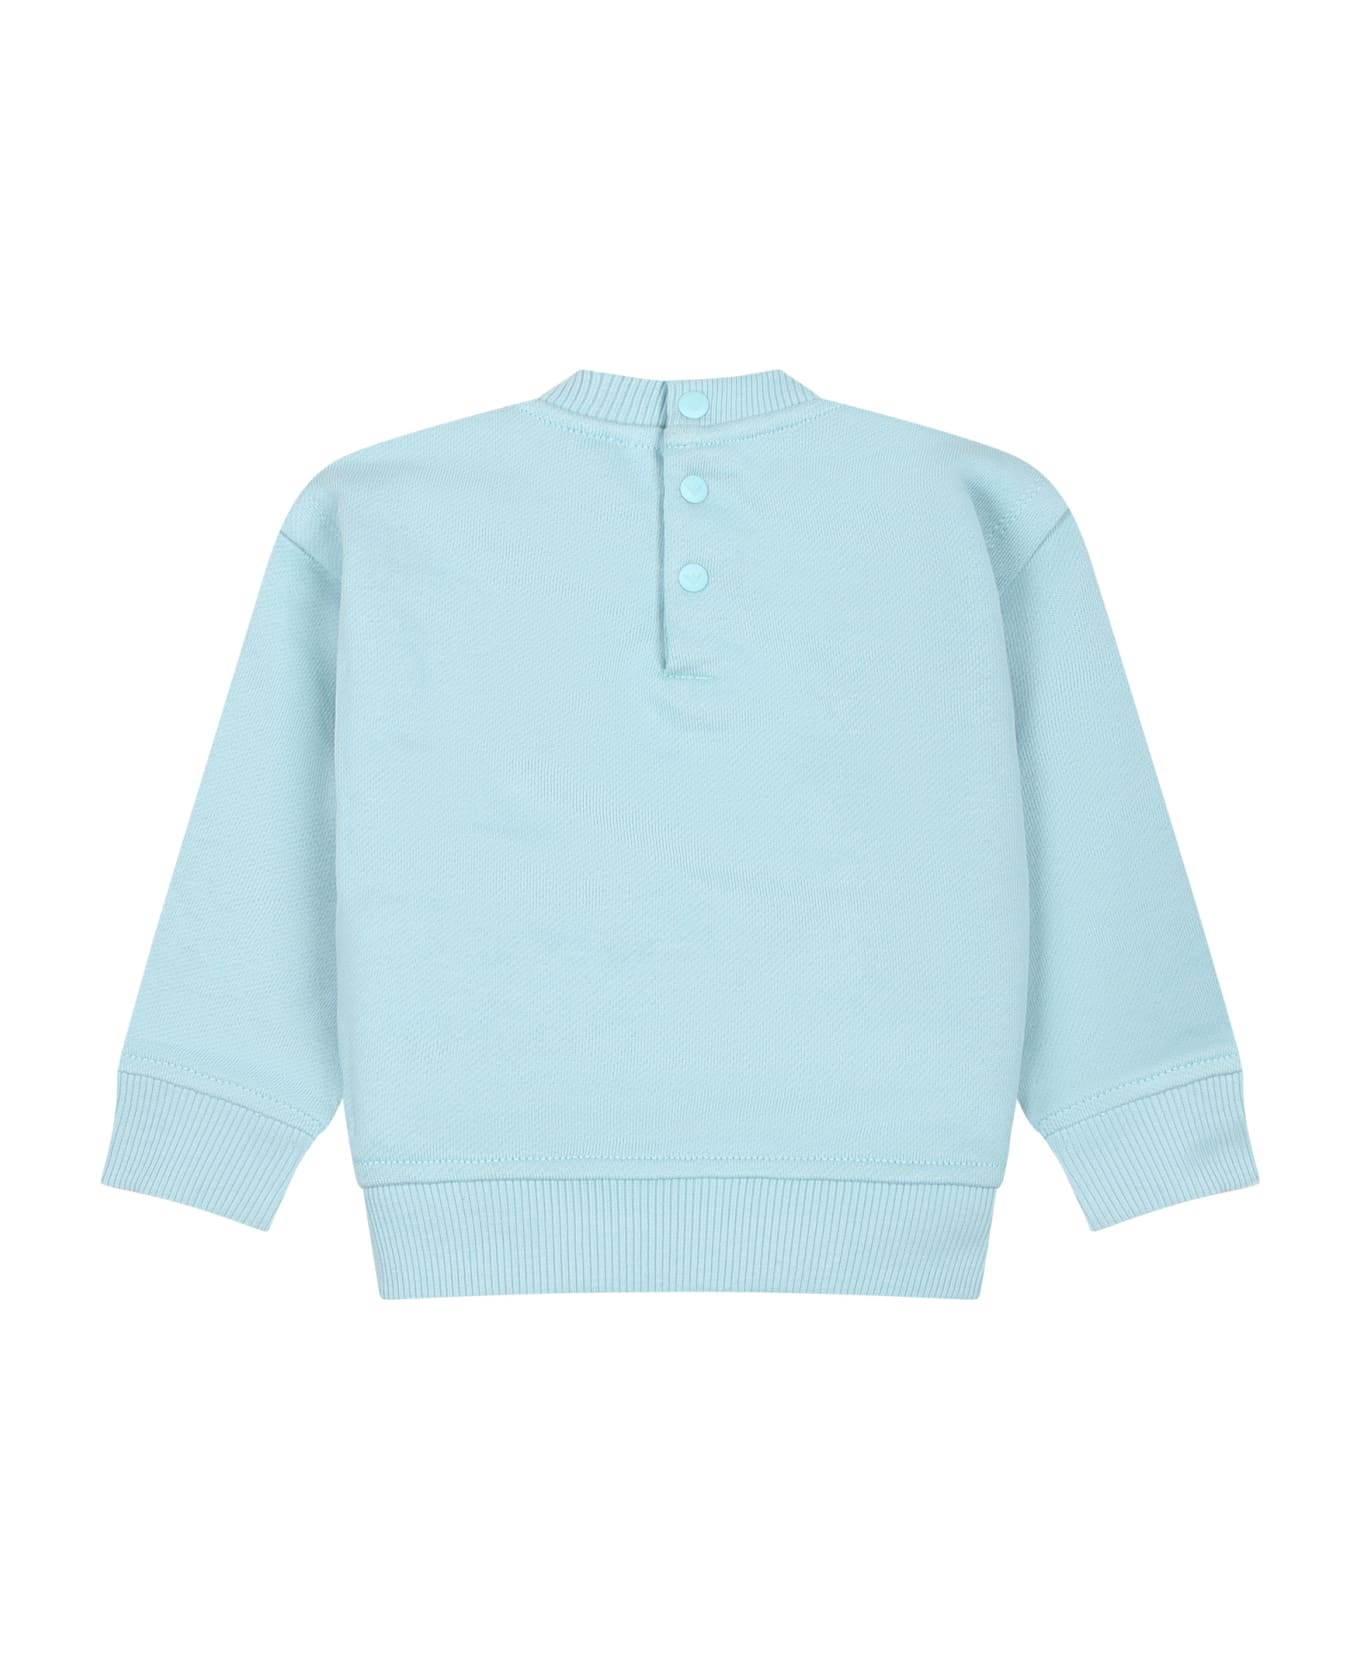 Emporio Armani Light Blue Sweatshirt For Baby Boy With The Smurfs - Light Blue